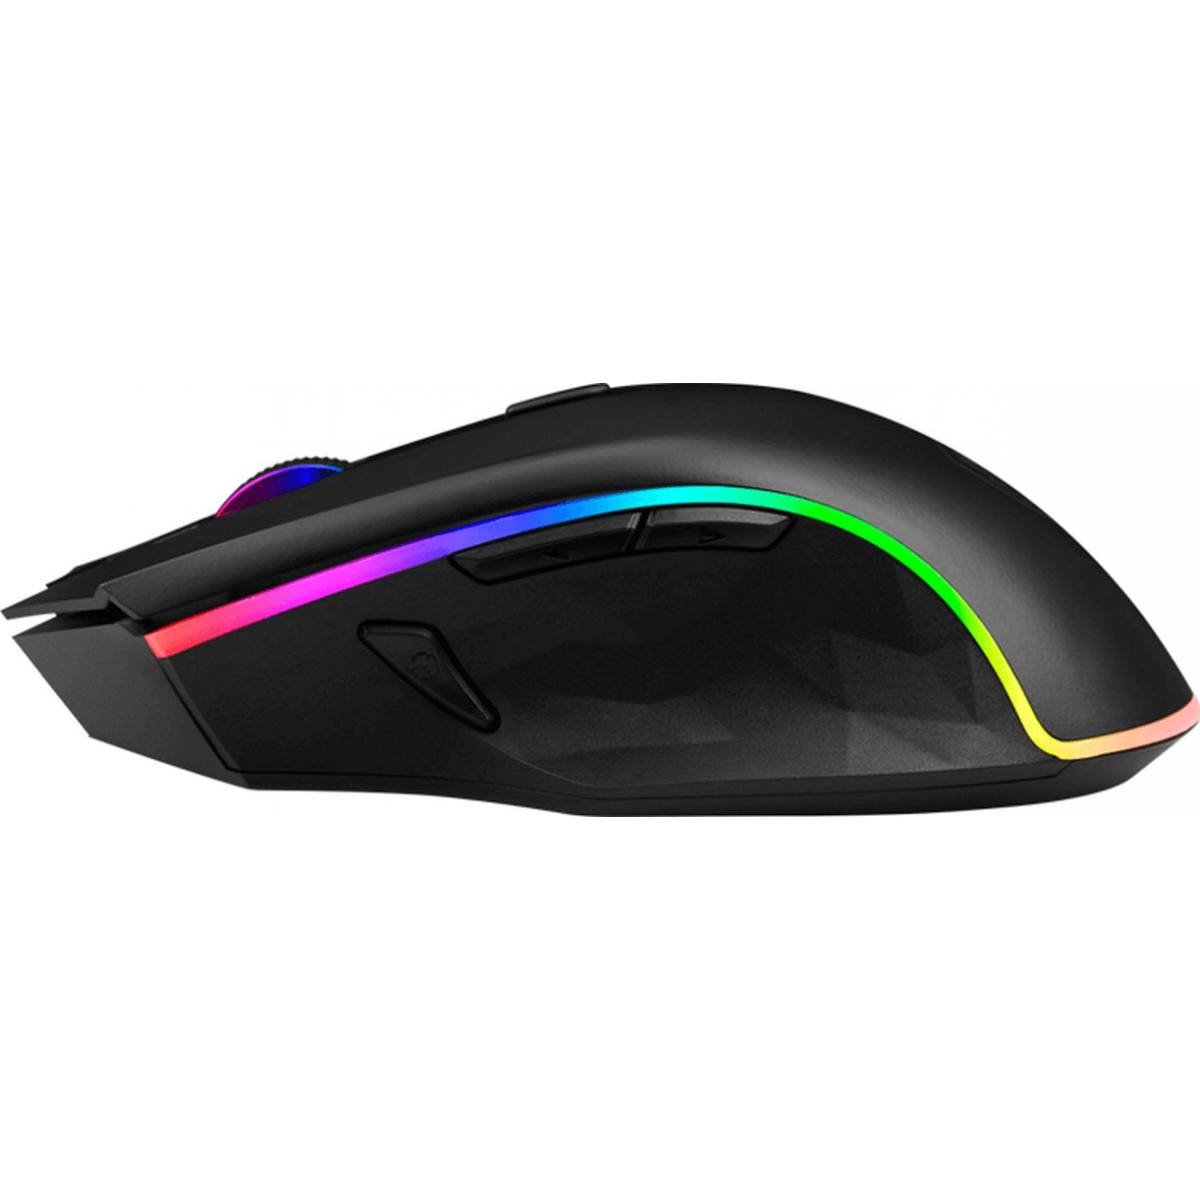 Mouse Gamer Sades S17 Scythe RGB, 4000 DPI, 7 Botões, Black